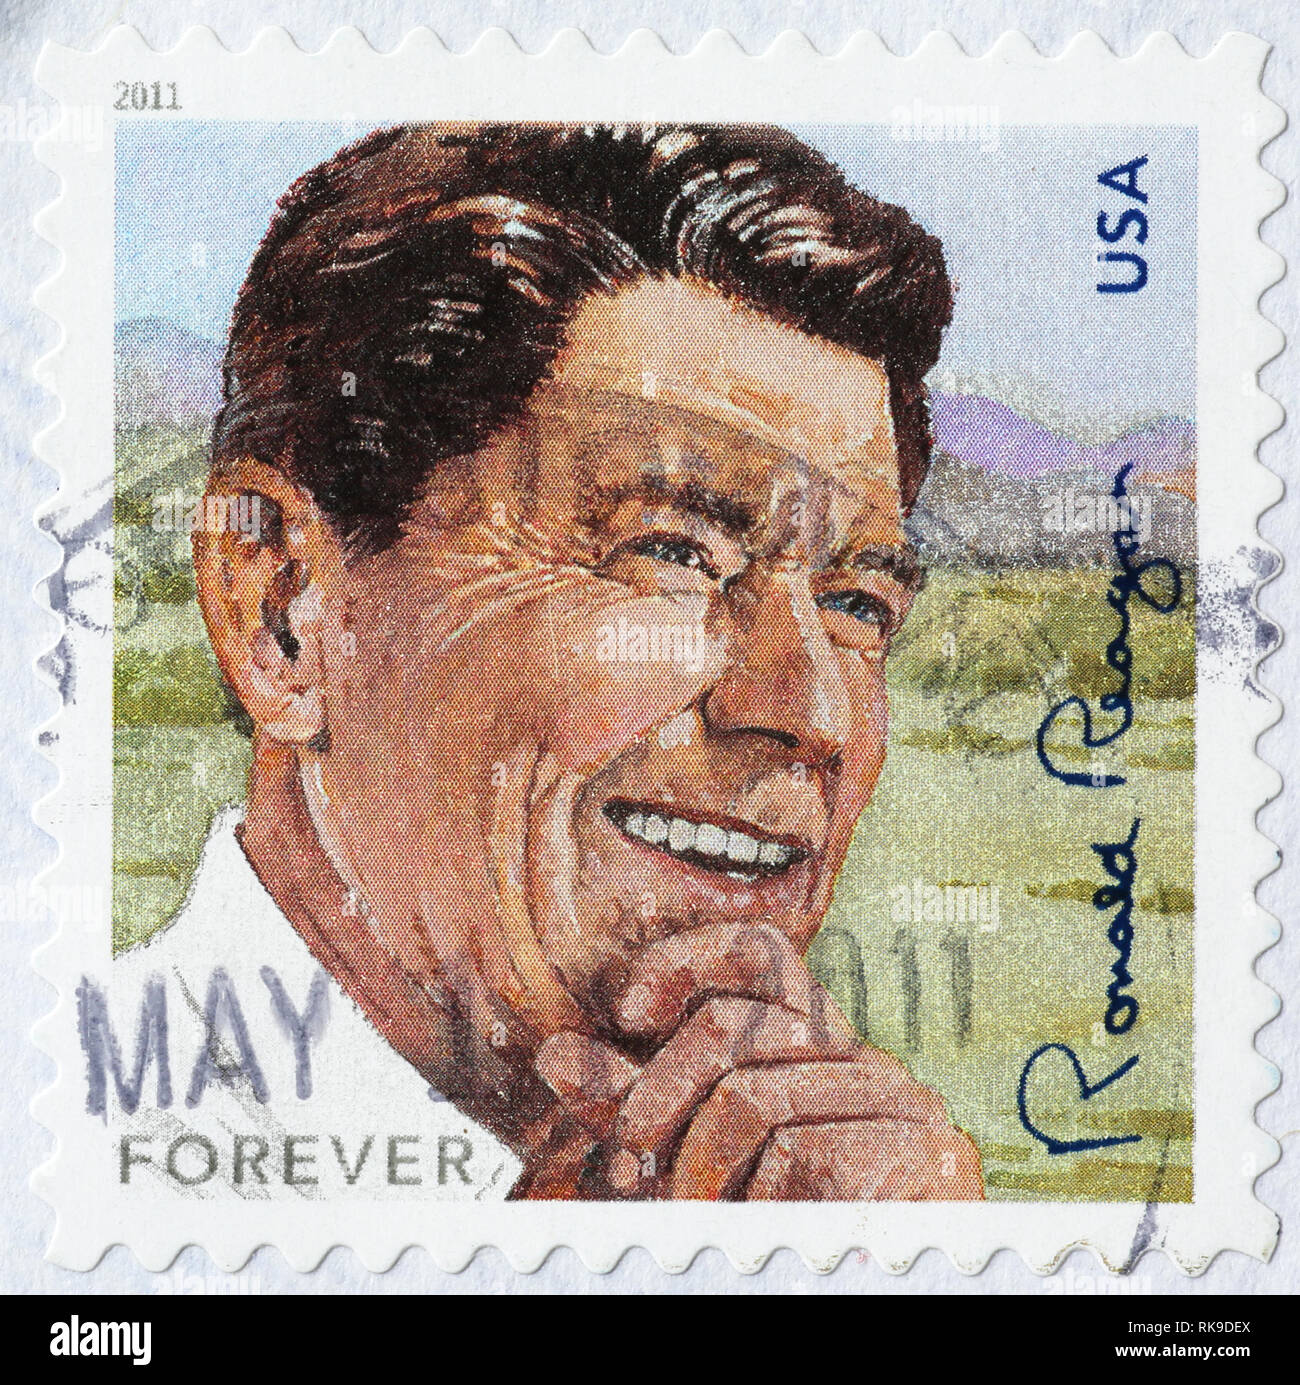 President Ronald Reagan on american postage stamp Stock Photo